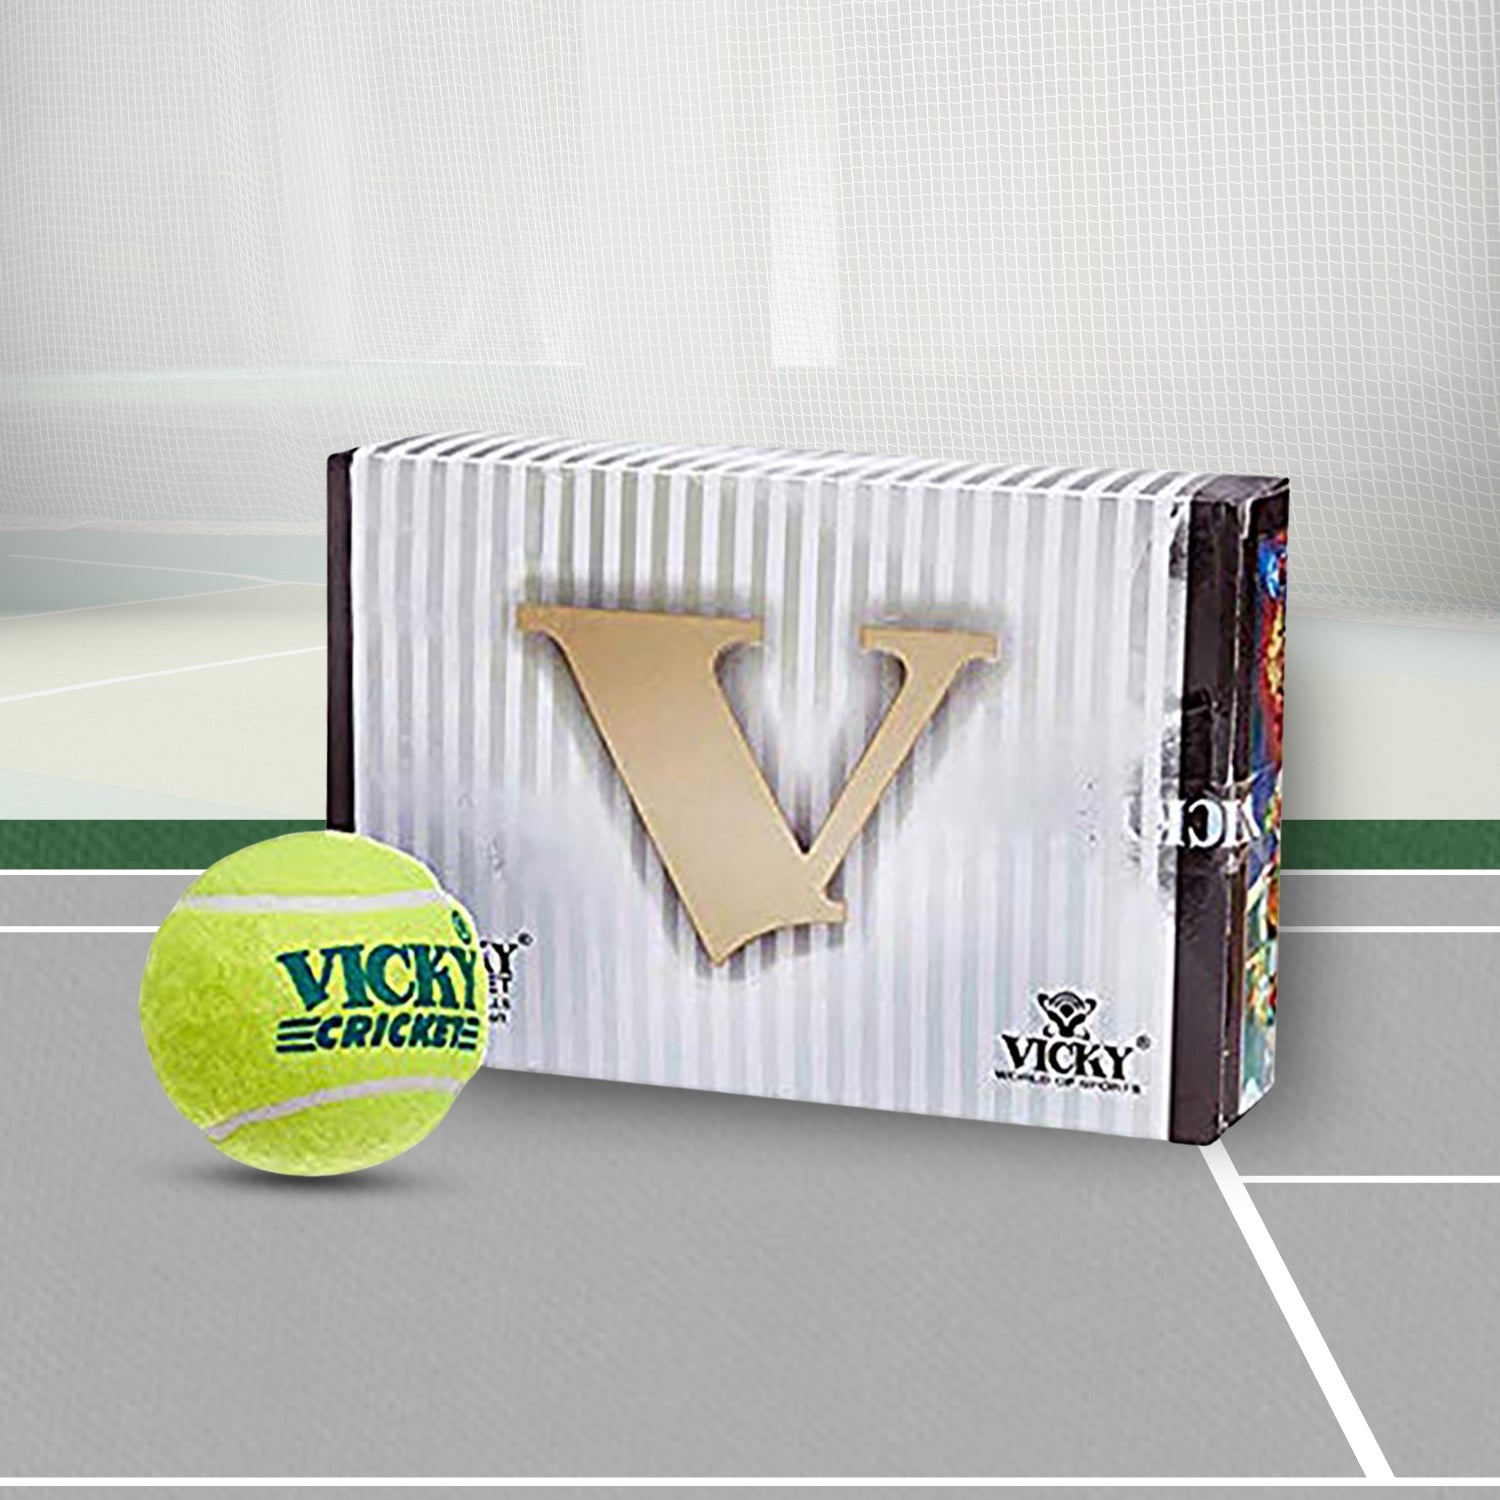 Vicky Cricket Tennis Ball - VICKY CRICKET Yellow - Best Price online Prokicksports.com